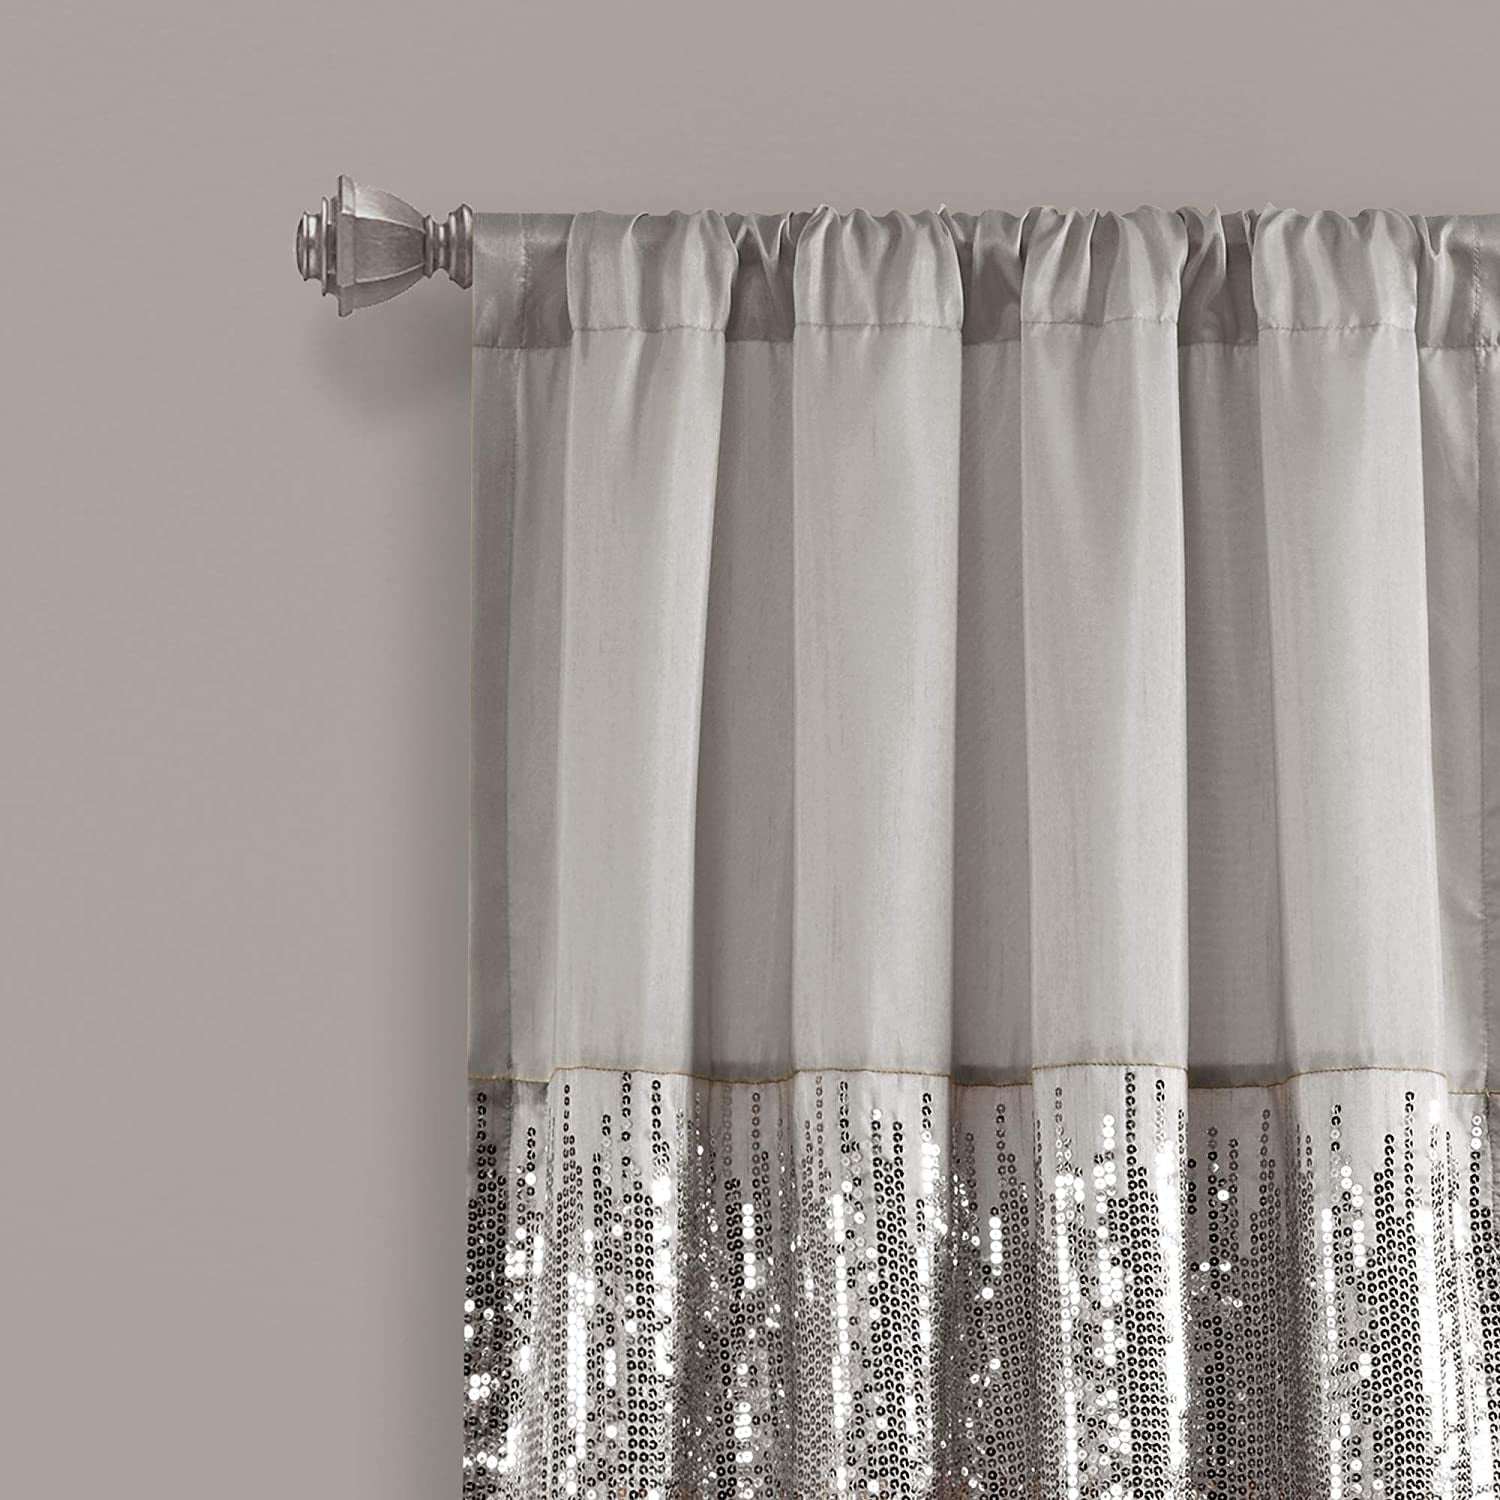 Night Sky Window Curtain Panel for Living, Bedroom, Dining Room (Single Curtain), 42"W X 84"L, Gray & Blush